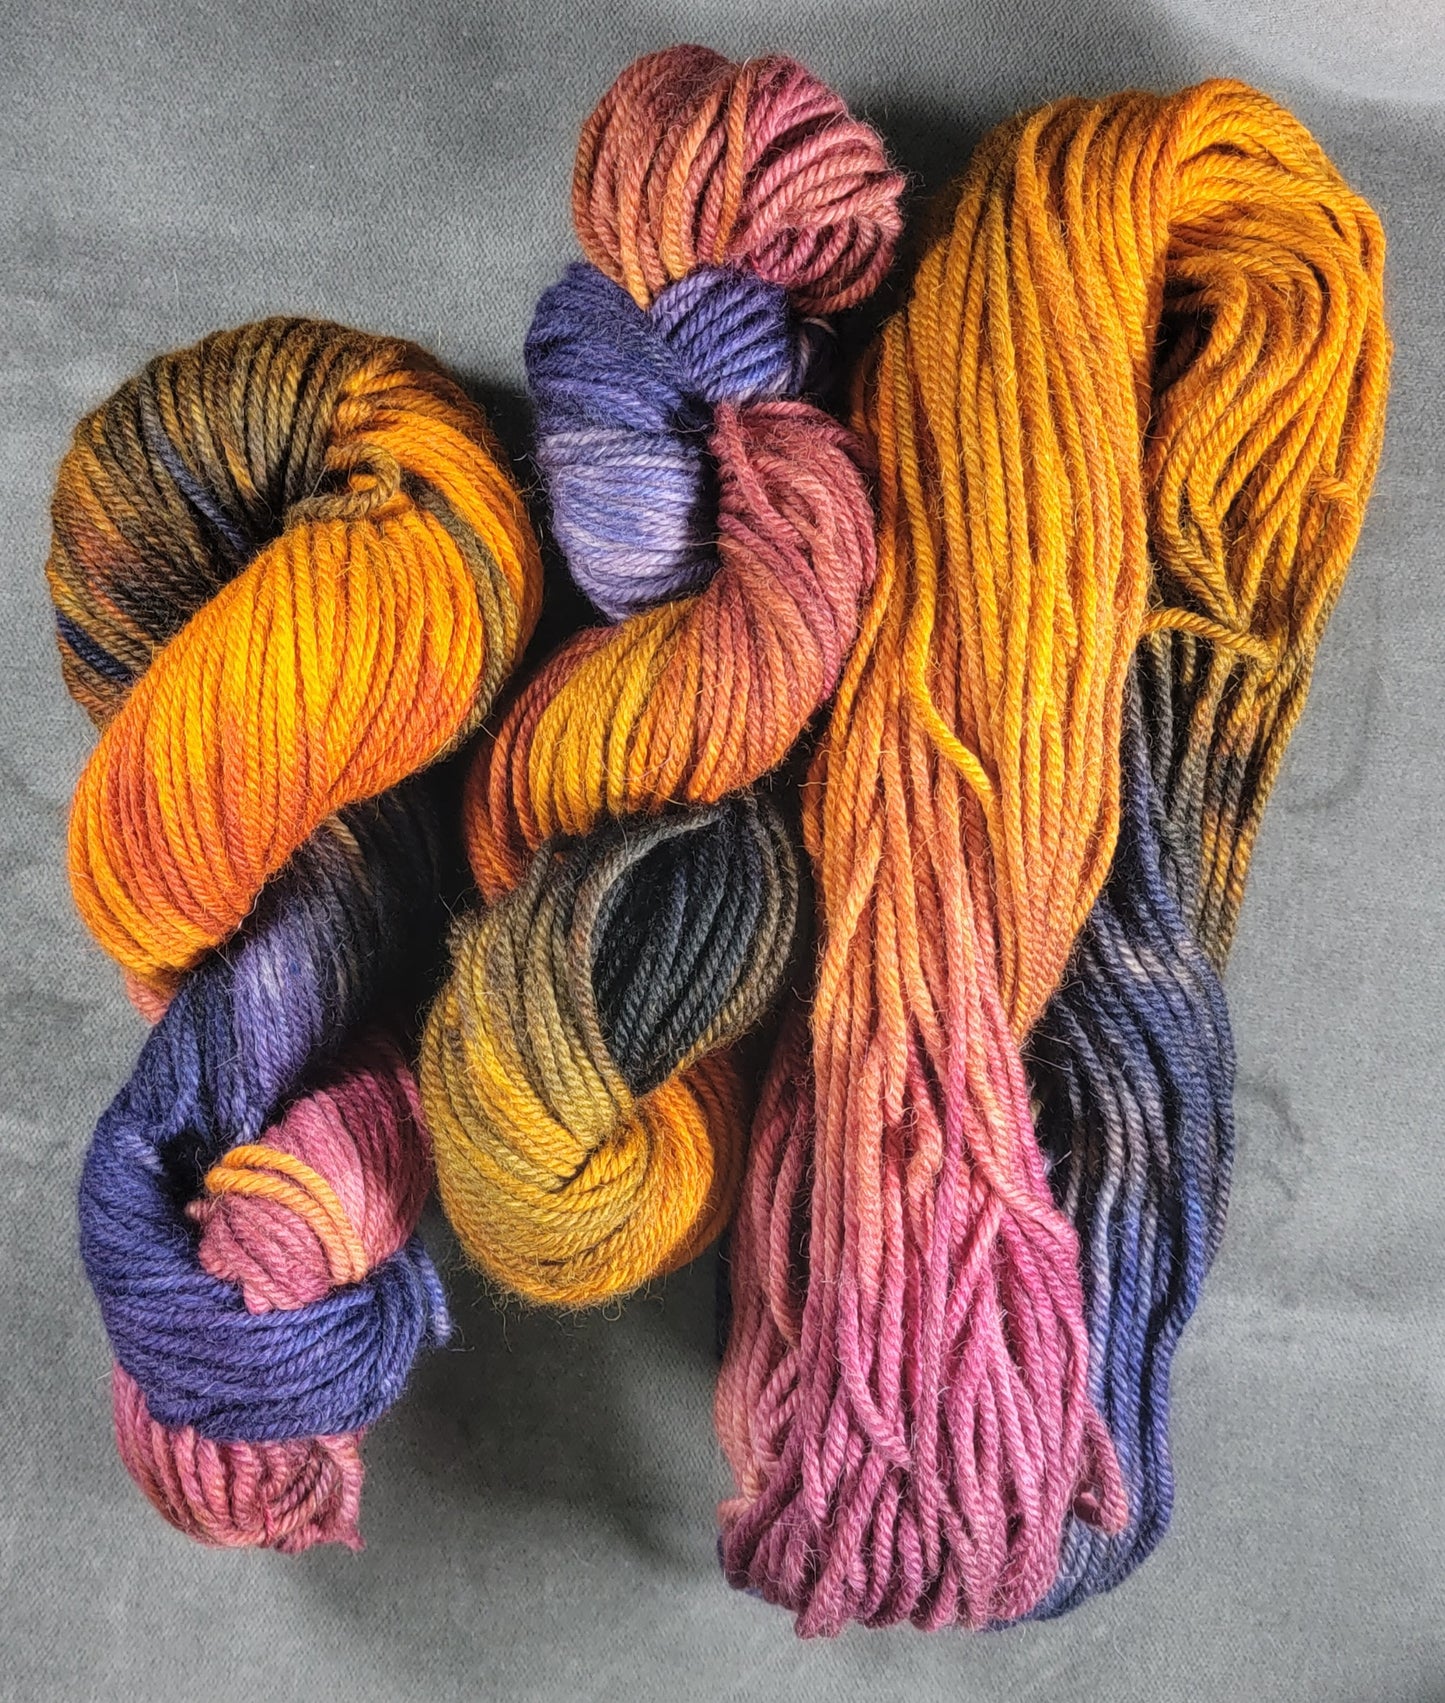 Hand Dyed Peruvian Highland Wool-Superfine Alpaca Yarn (NY)/Bulky